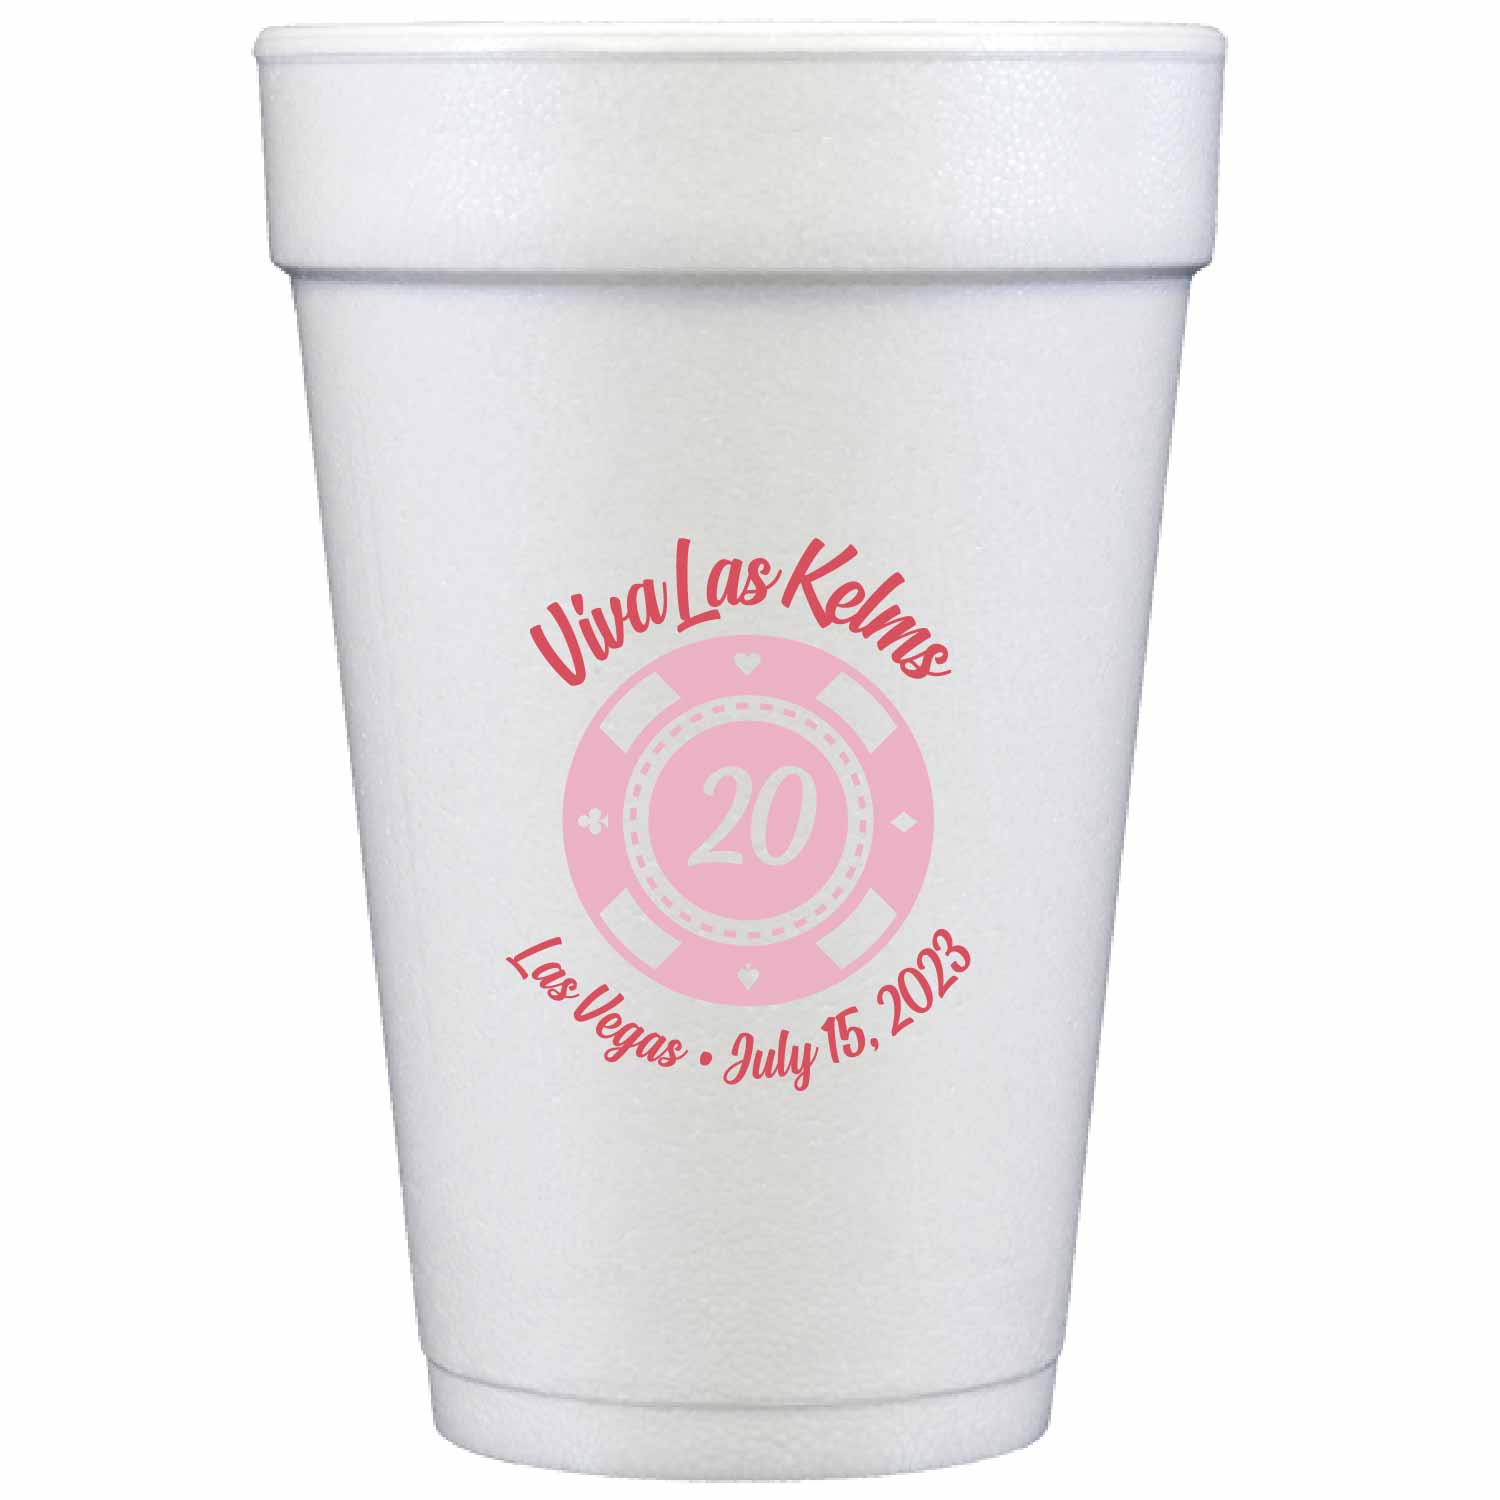 las vegas personalized styrofoam cup